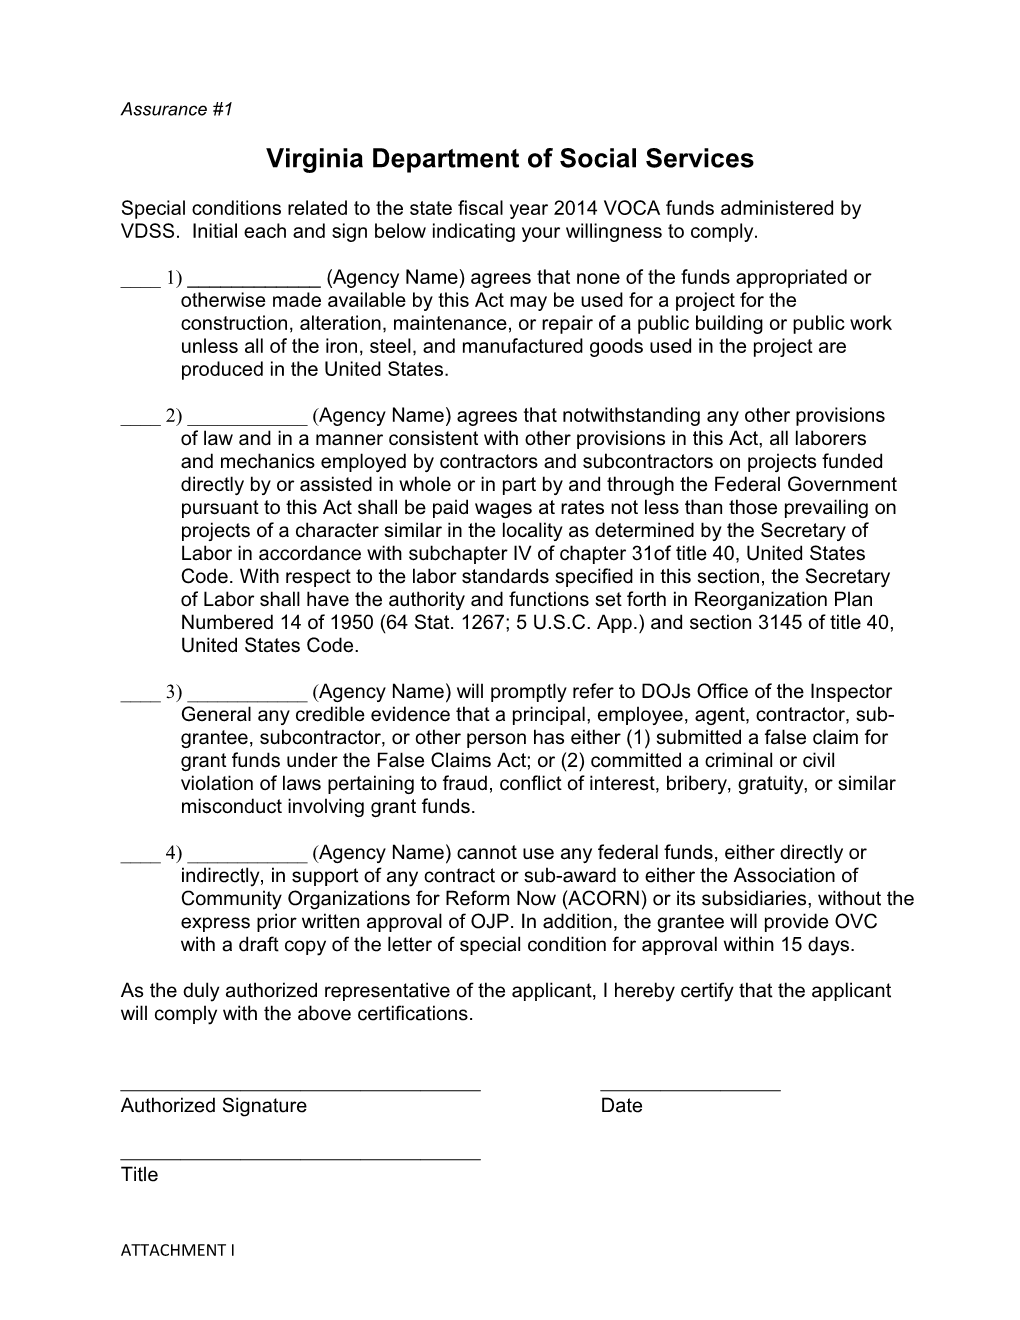 Virginia Department of Social Services s1